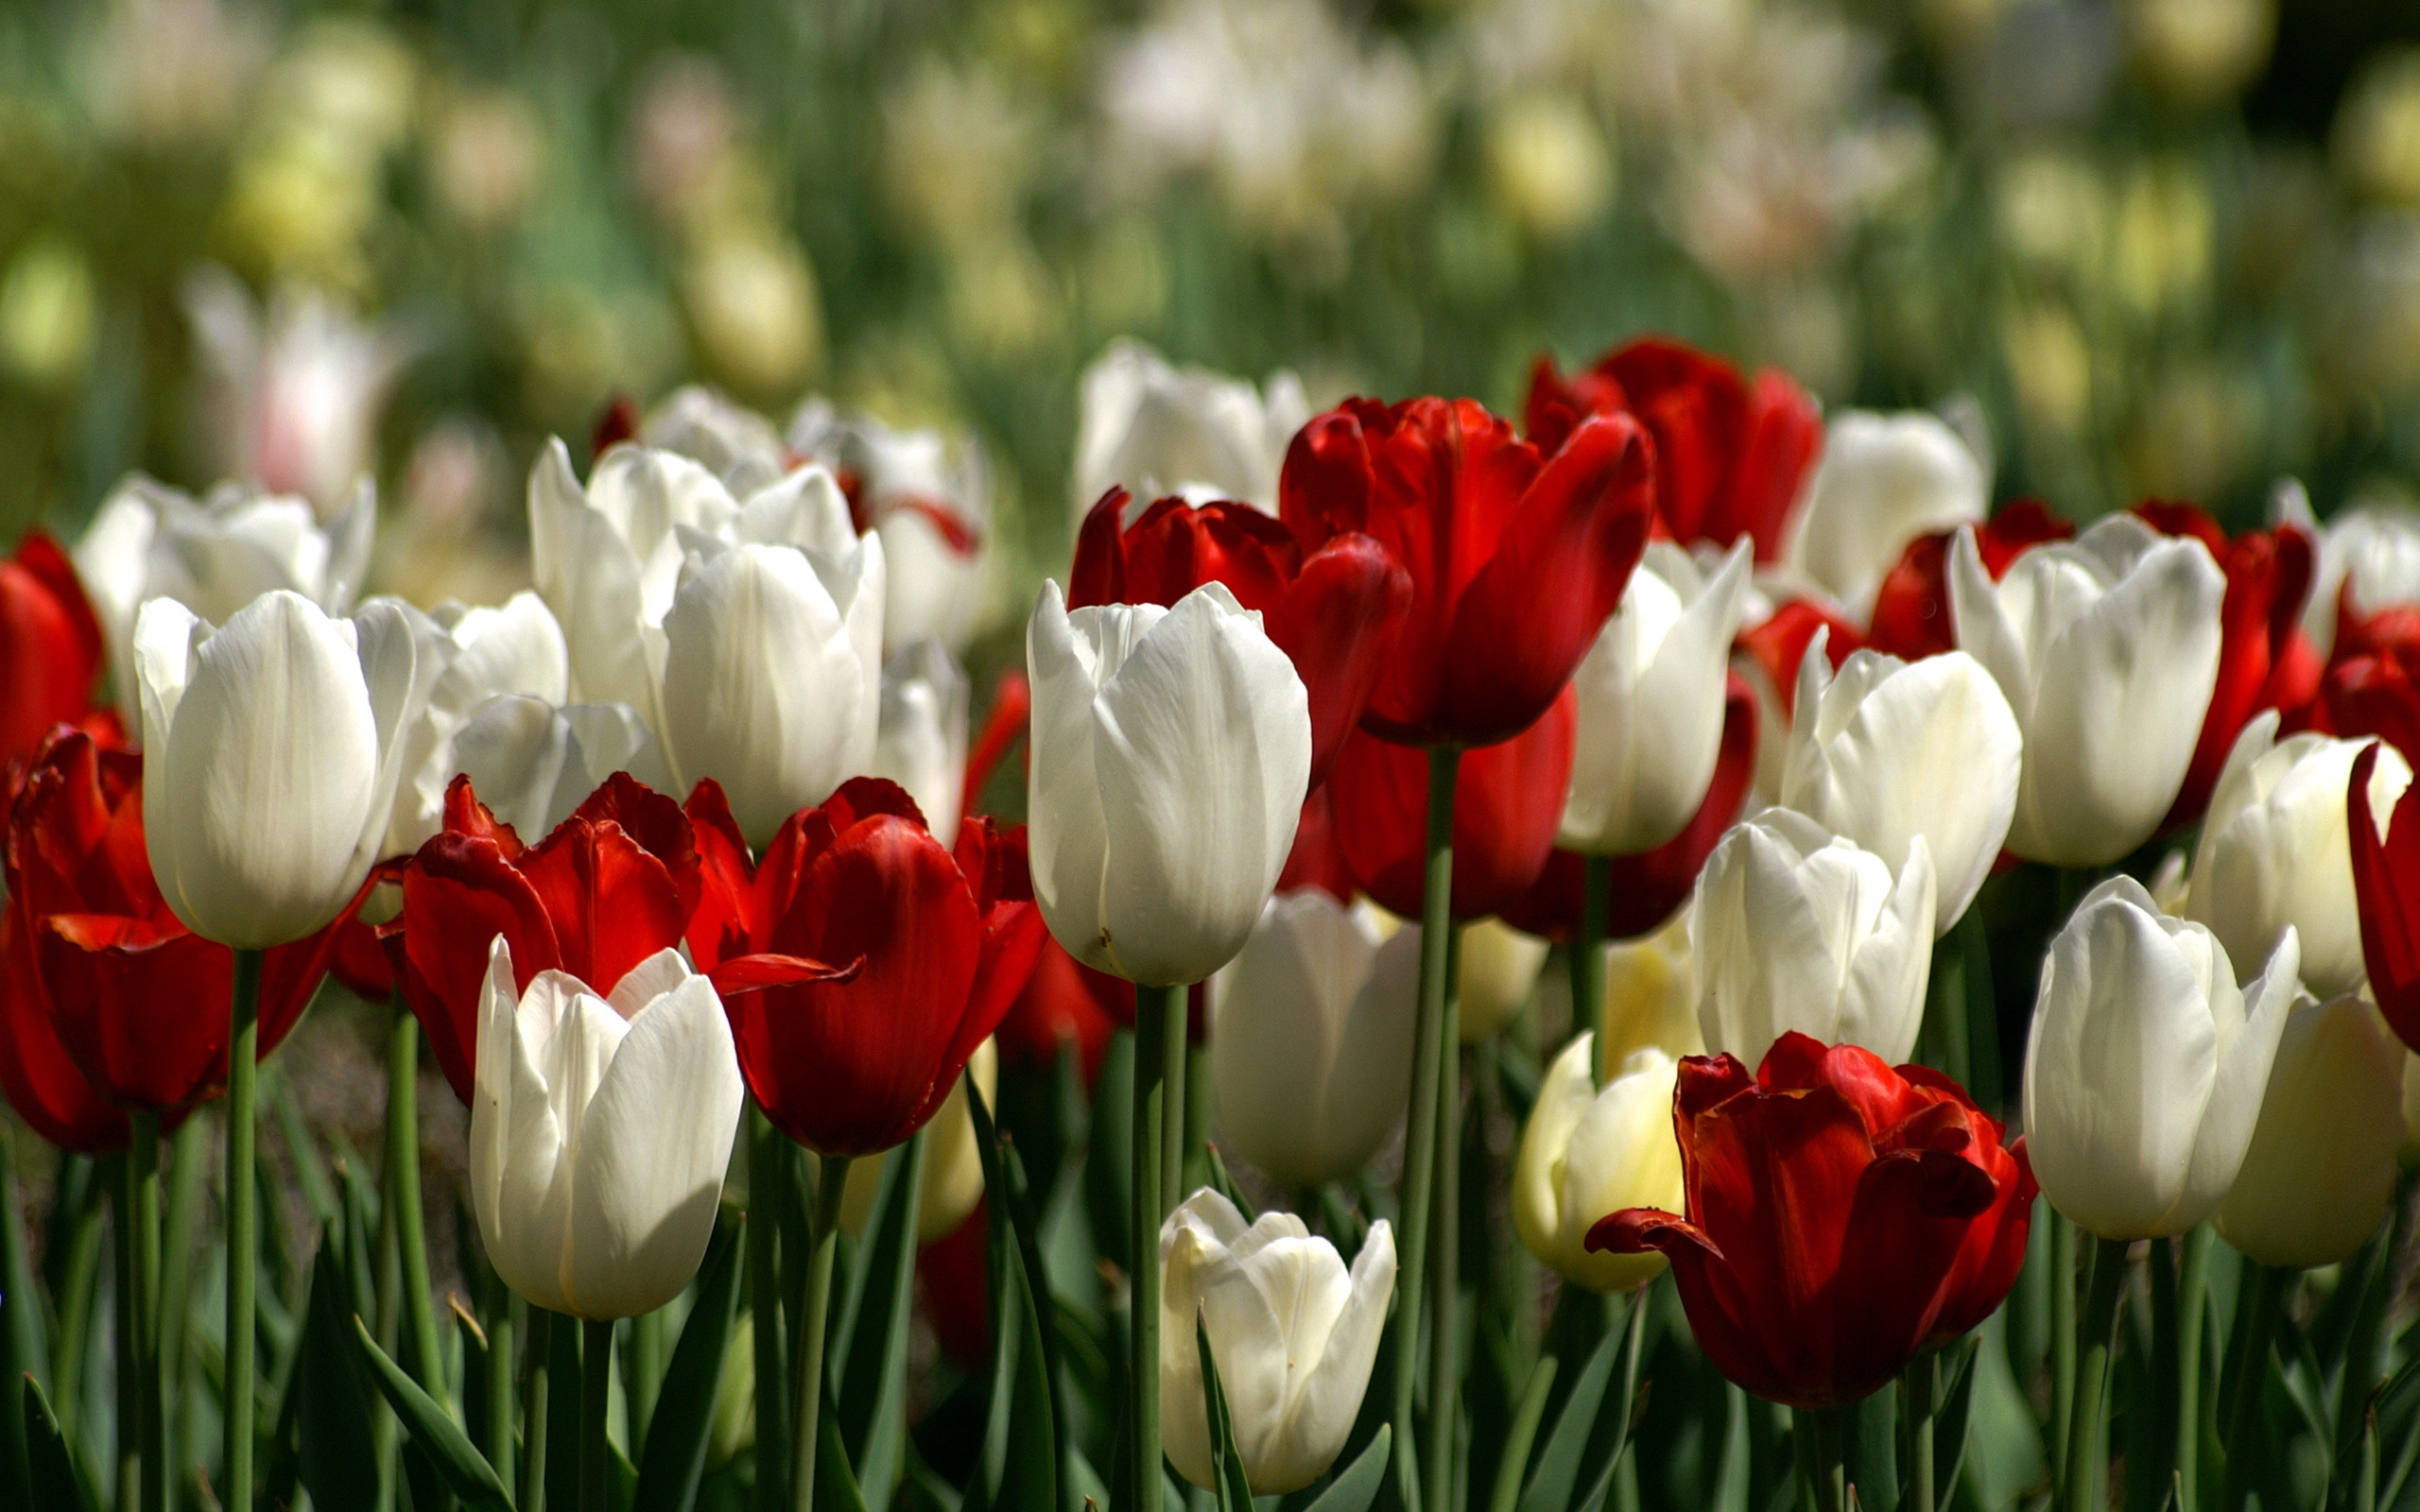 Обои на телефон красивые тюльпаны. Ред Вайт тюльпан. Тюльпан Tulipa.